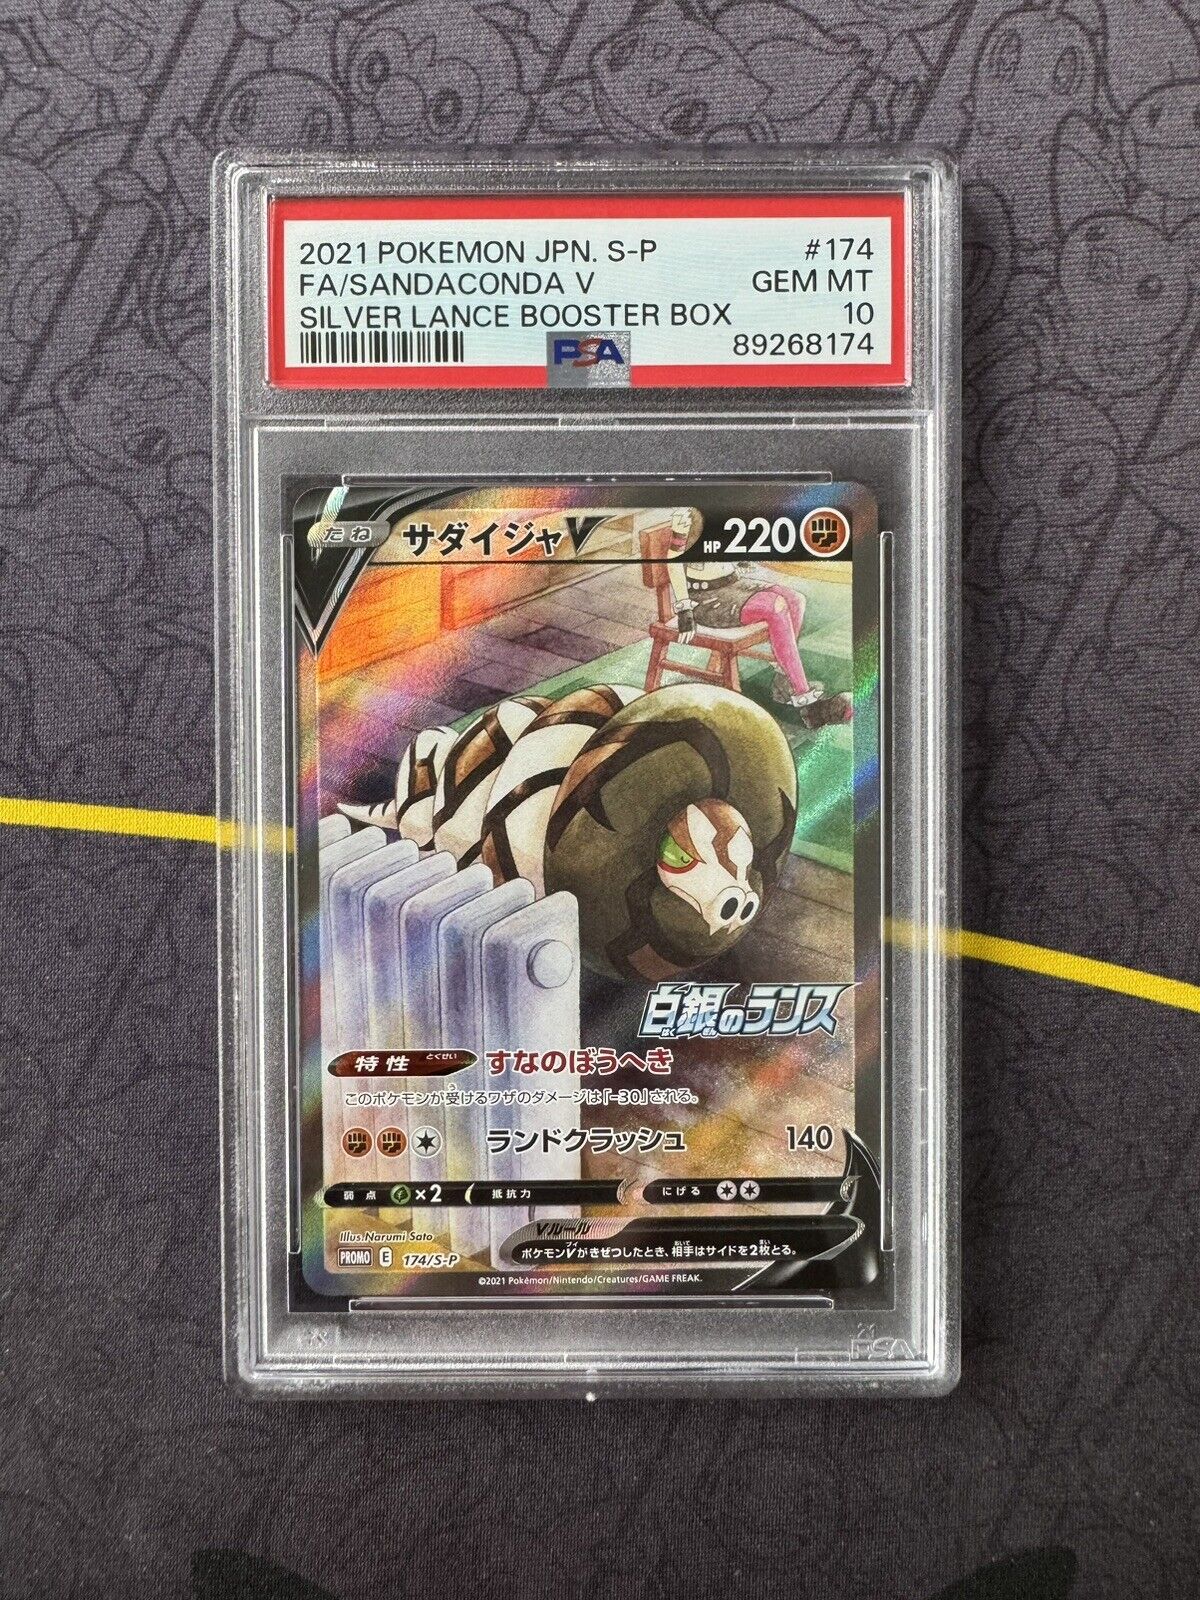 PSA 10 Sandaconda V 174/S-P Silver Lance Booster Promo Japanese Pokemon Card